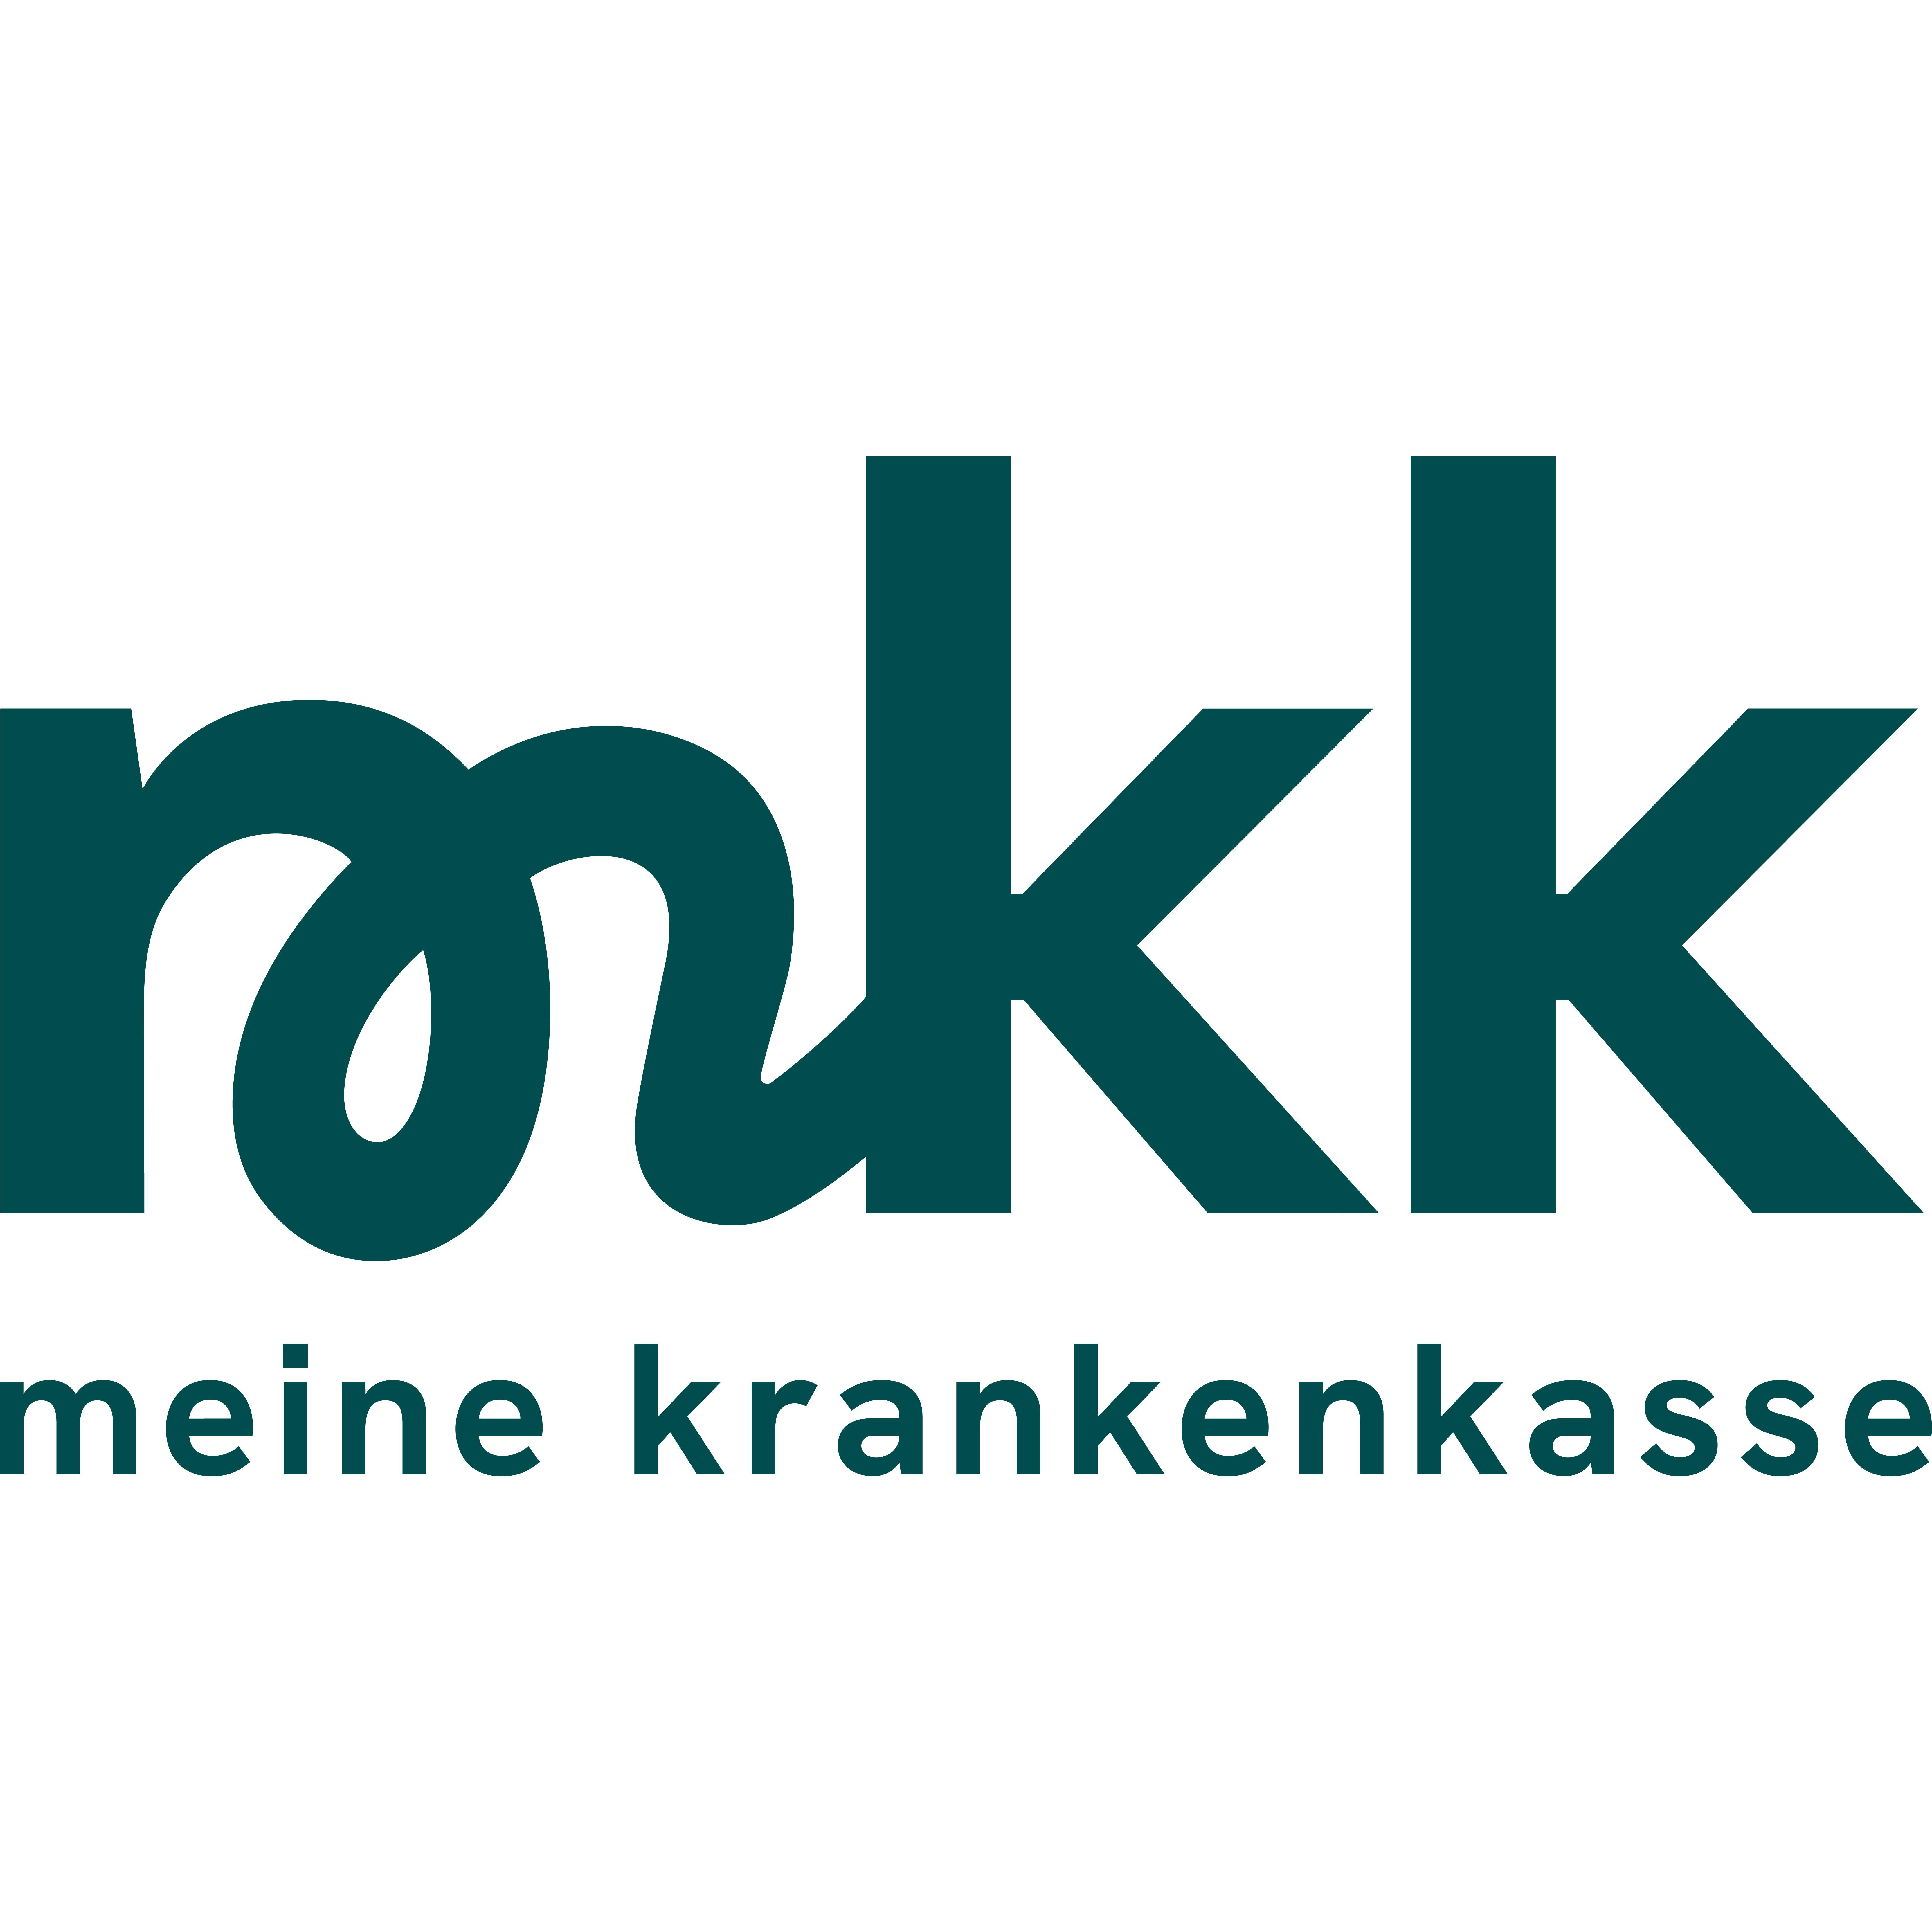 mkk - meine krankenkasse in Duisburg - Logo